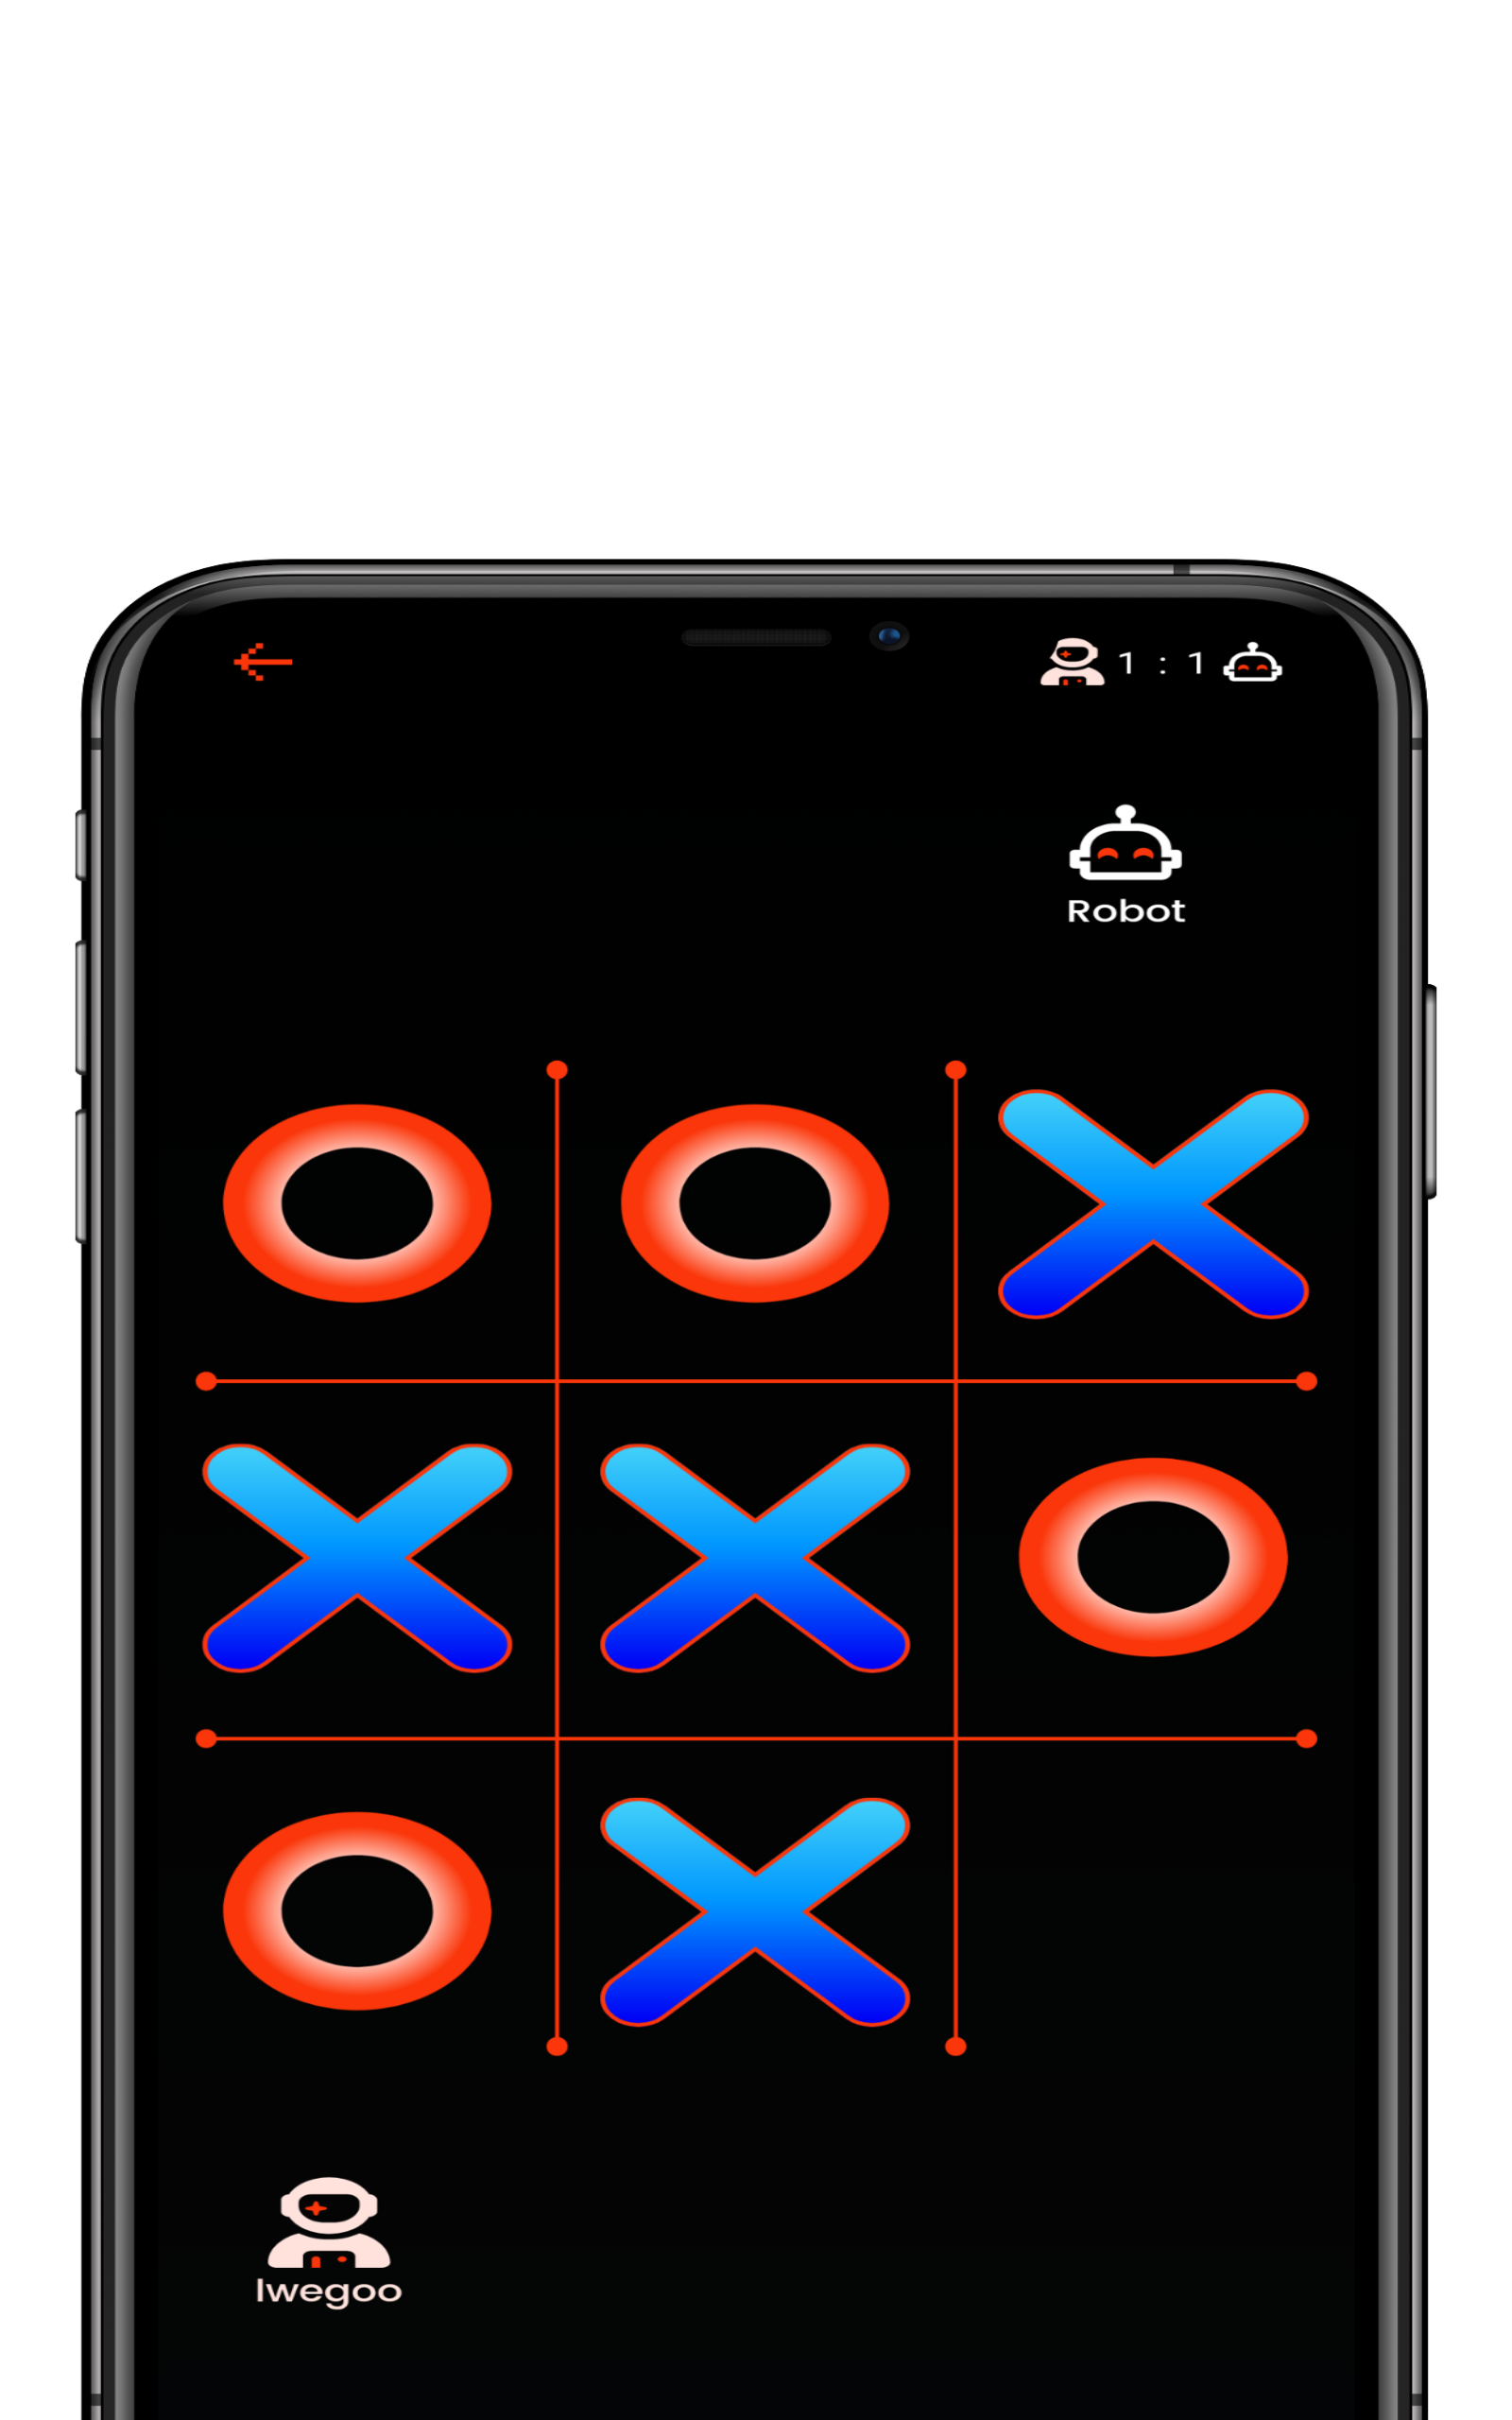 Tic Tac Toe Spielen Sie mit Freunden mobile Version Android iOS-TapTap